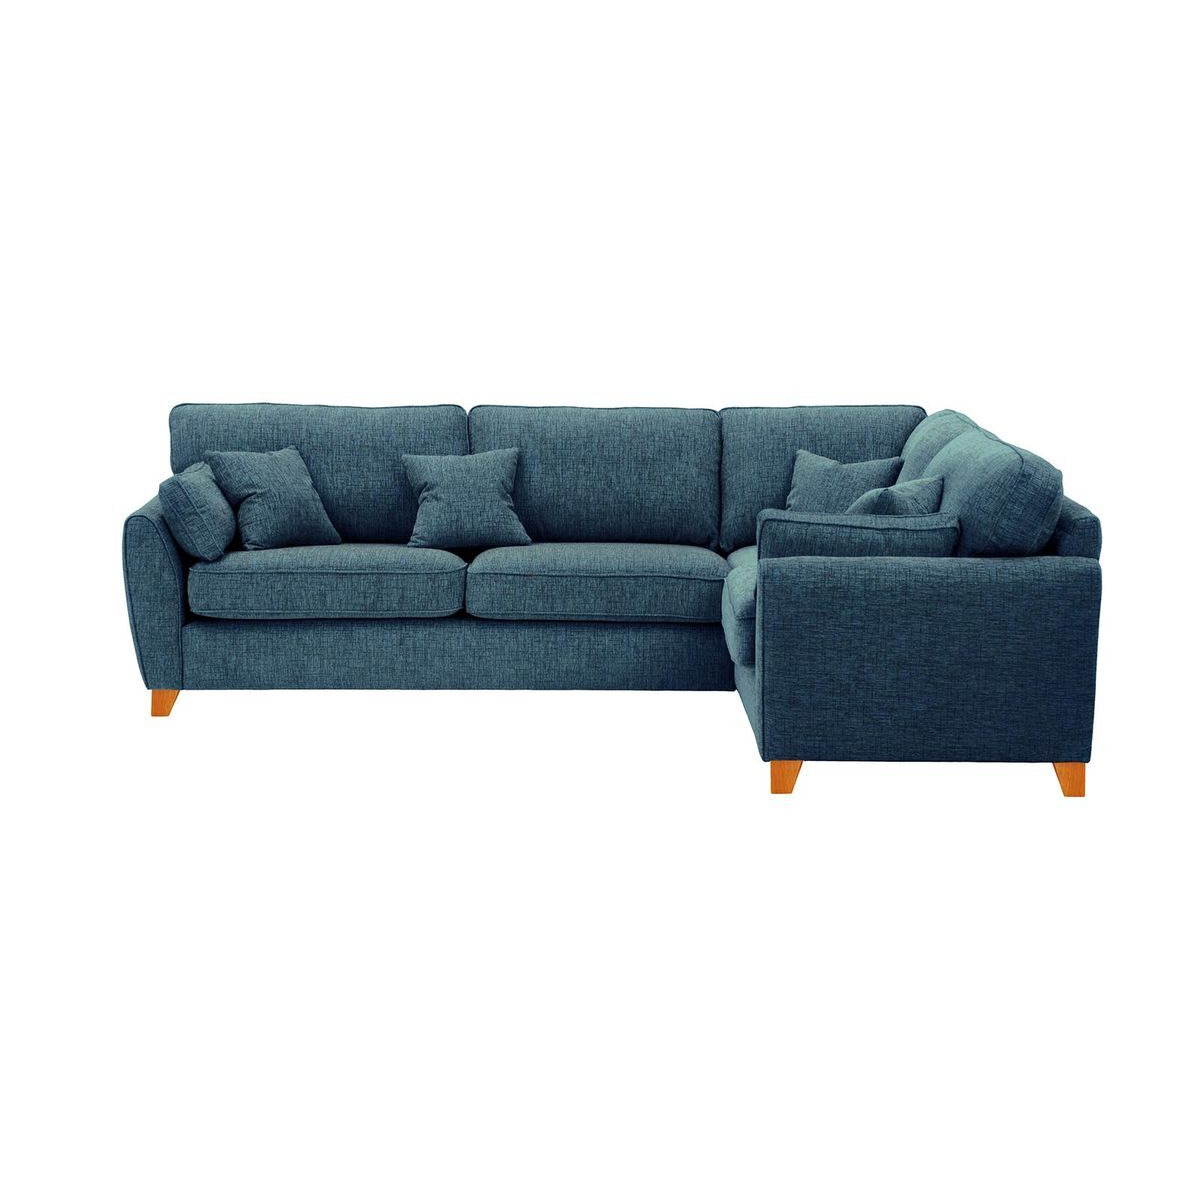 James Large Right Corner Sofa, teal, Leg colour: aveo - image 1